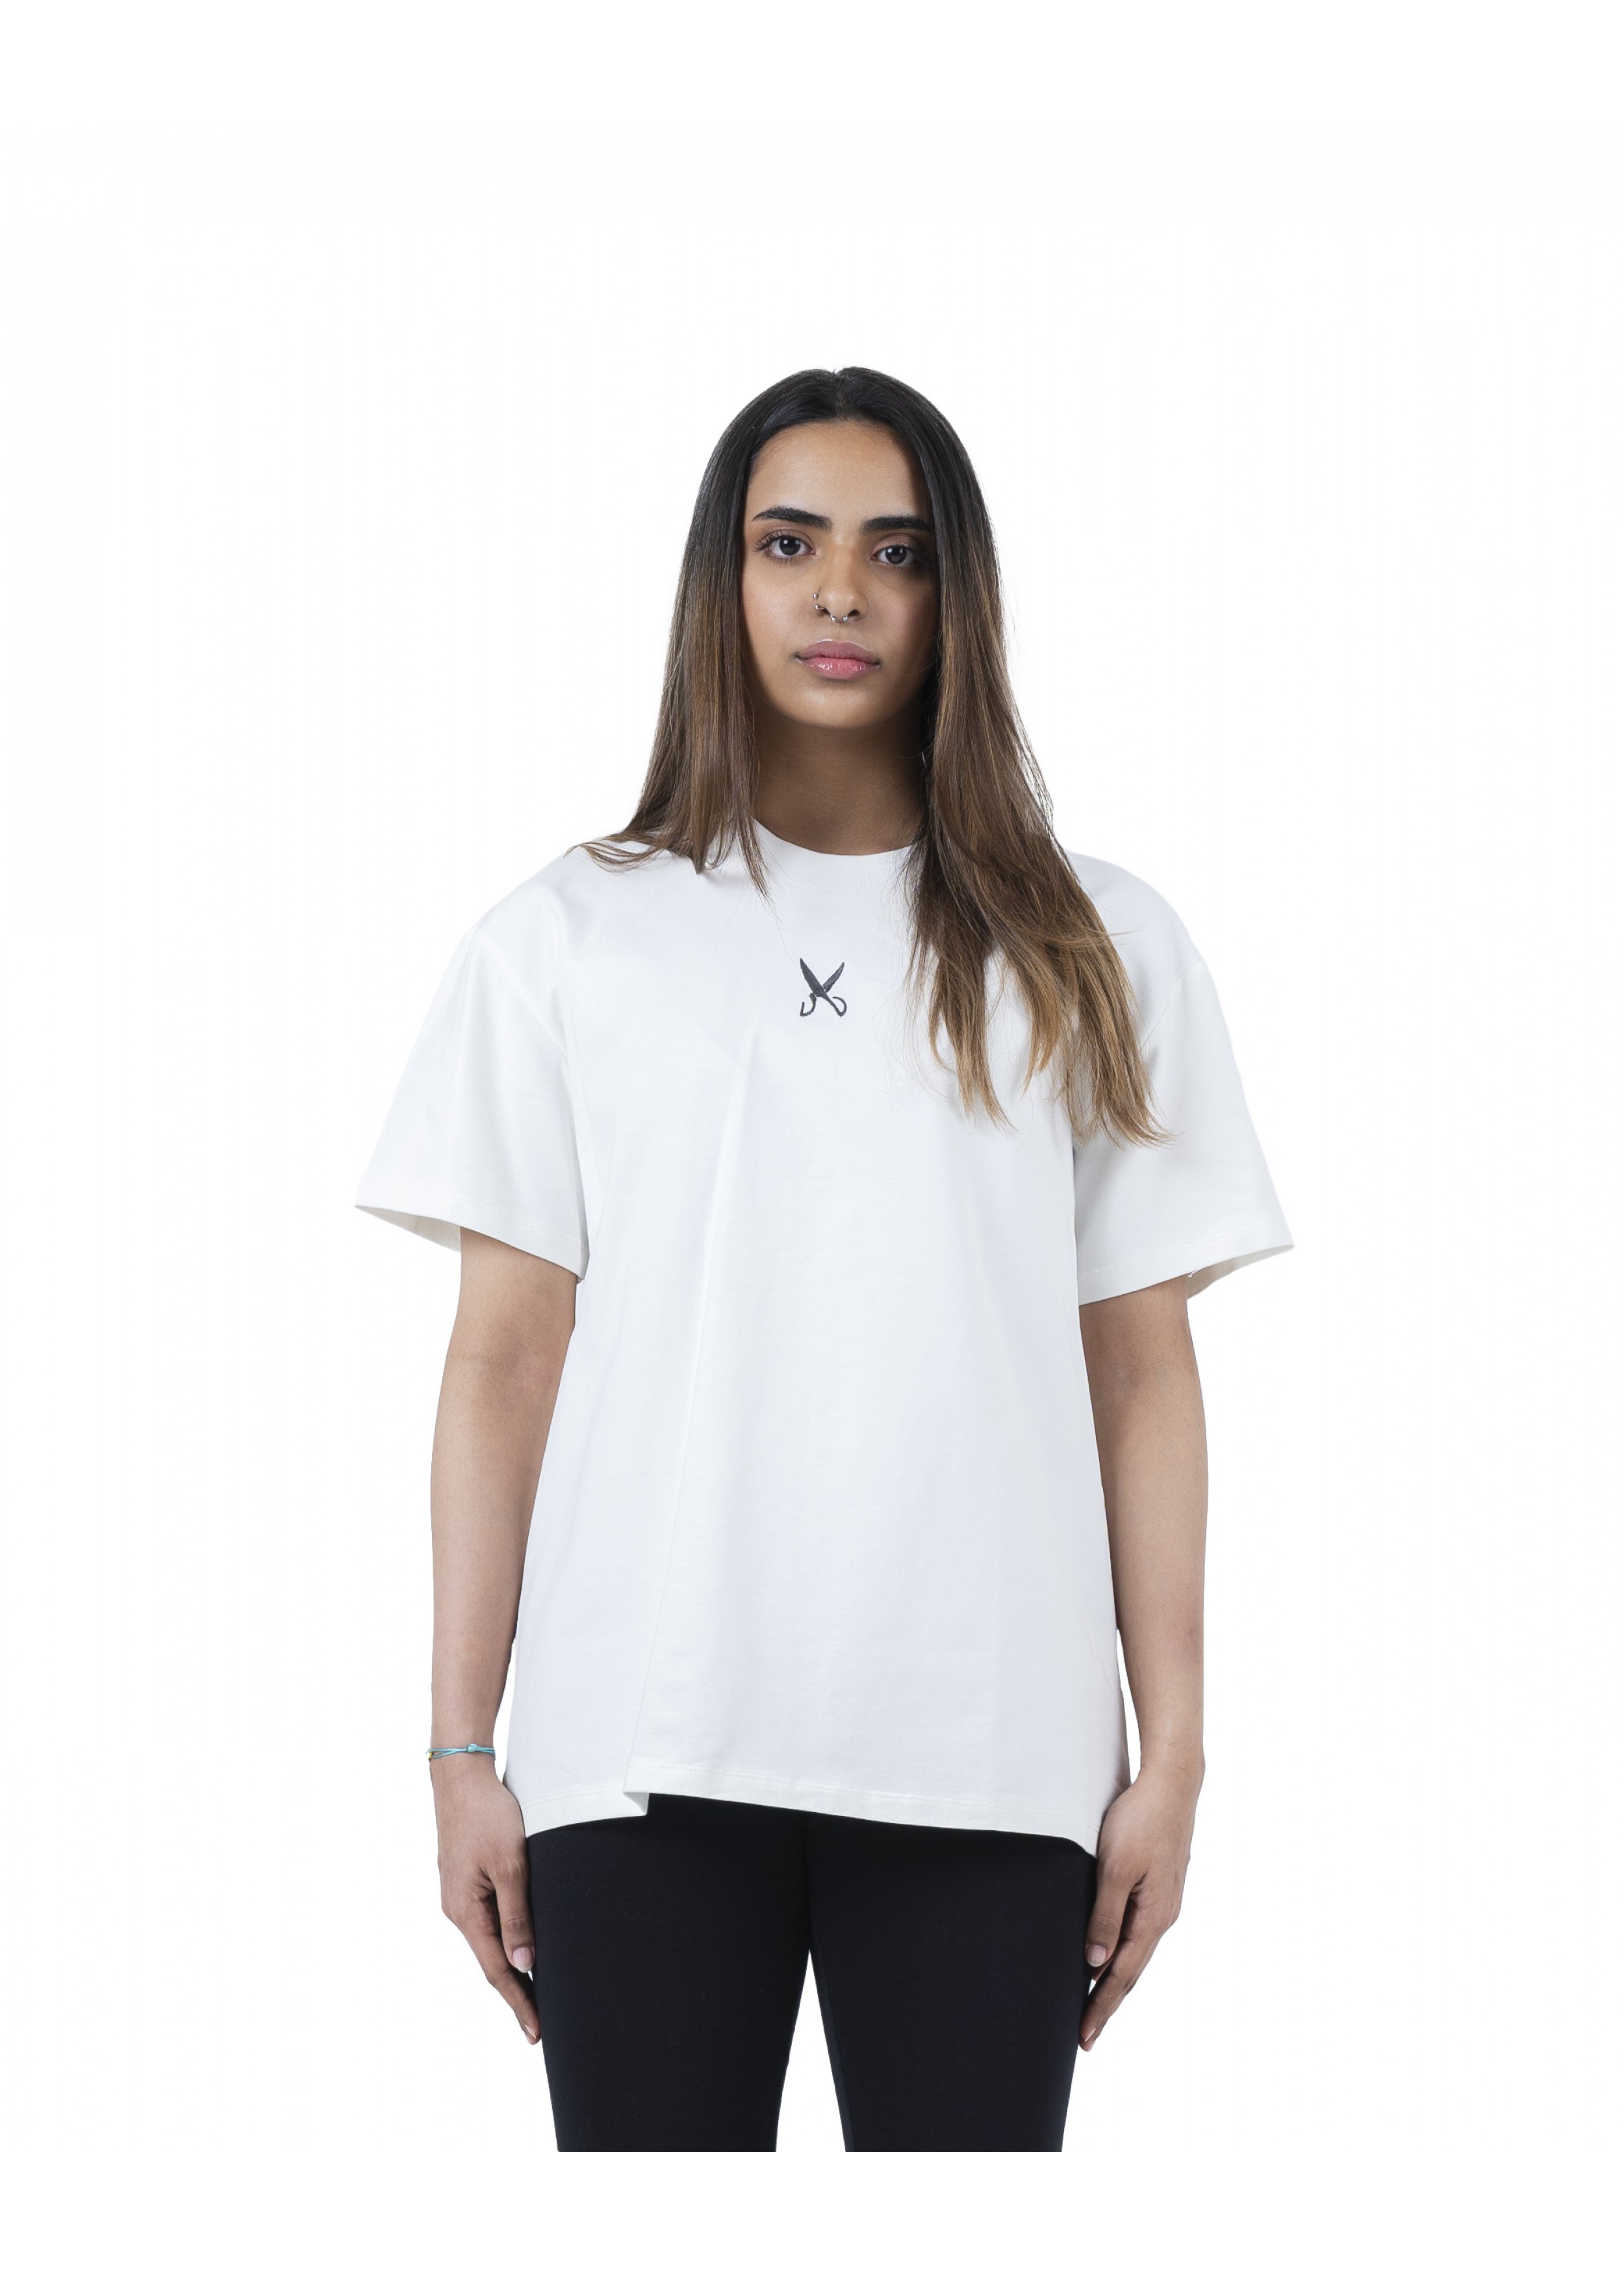 New T-shirt (North) - Off White